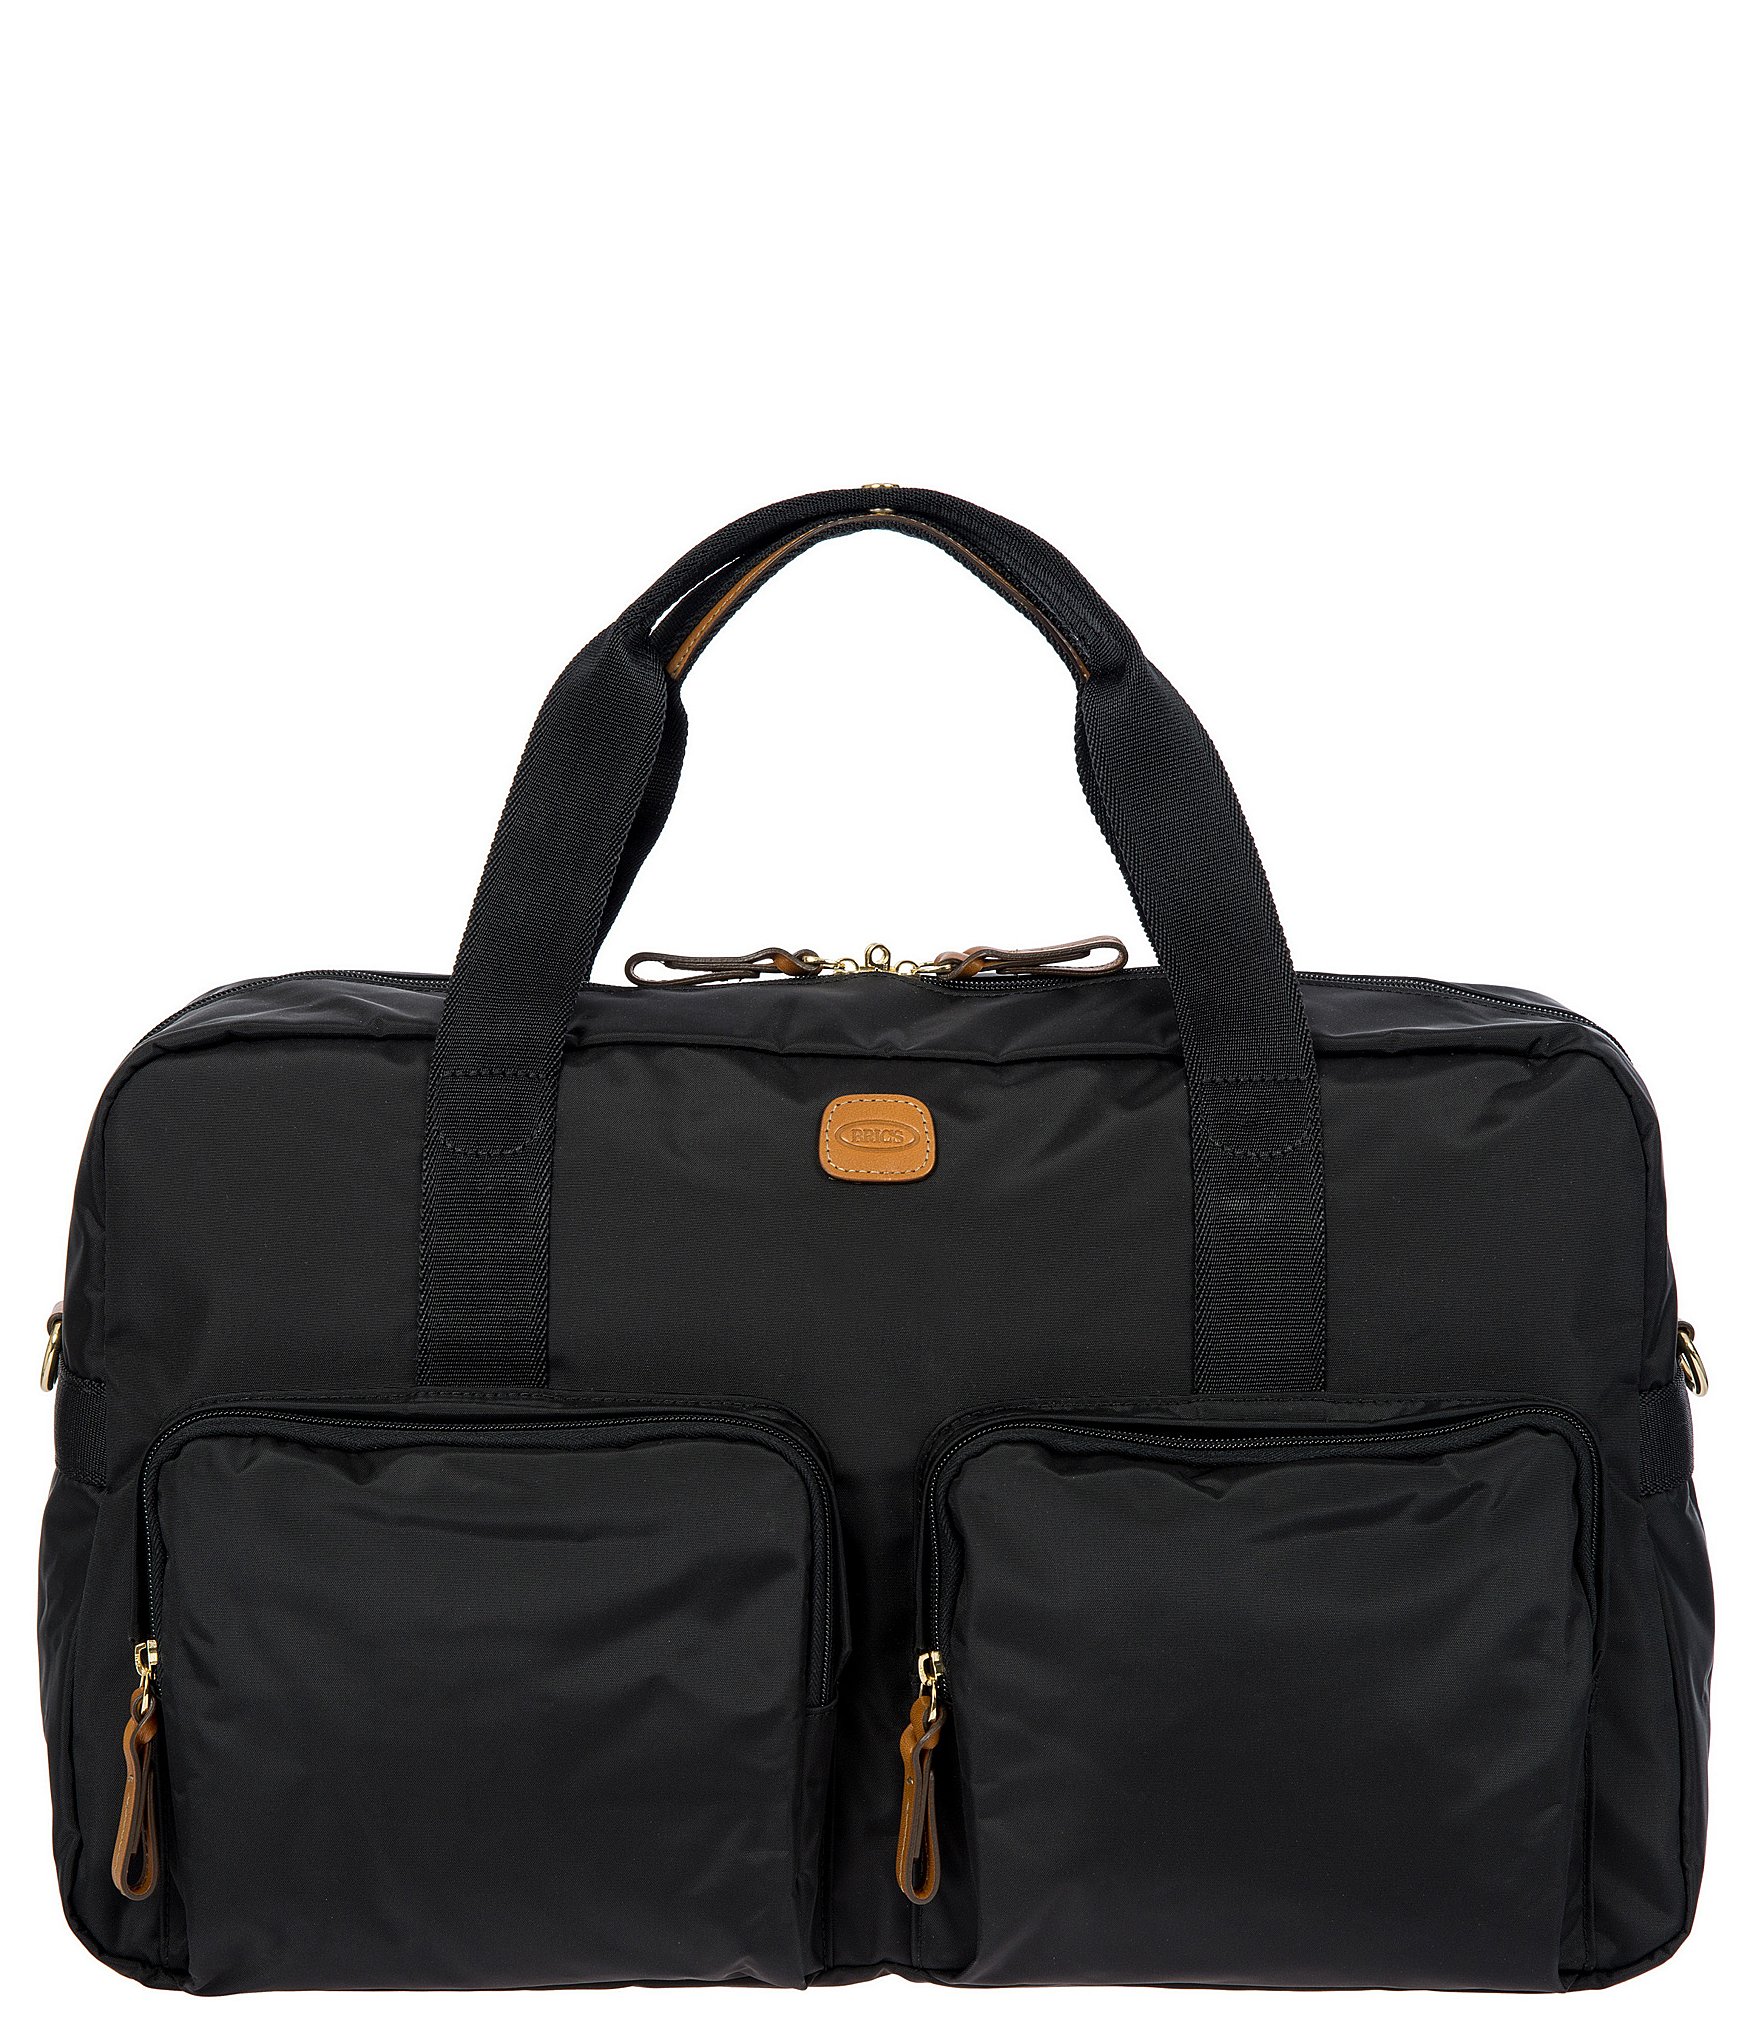 Brics Small Luggage & Travel Accessories | Dillard's